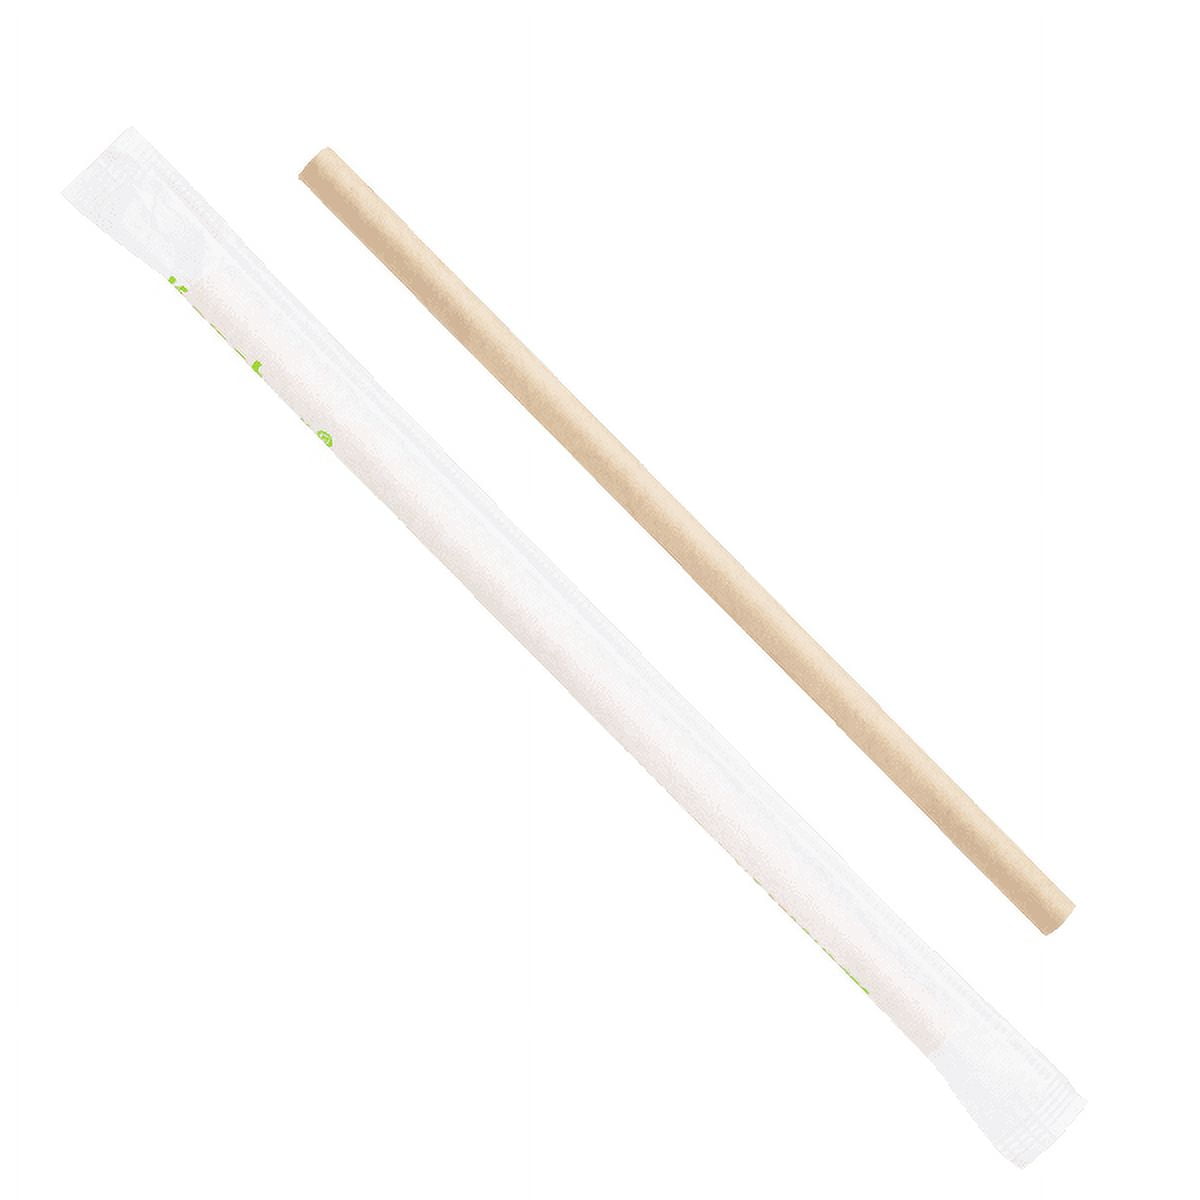 Karat Earth 9 Diagonal Cut Bamboo Fiber Colossal Straws (12mm) Paper Wrappep, Natural - Bag of 80 Pcs